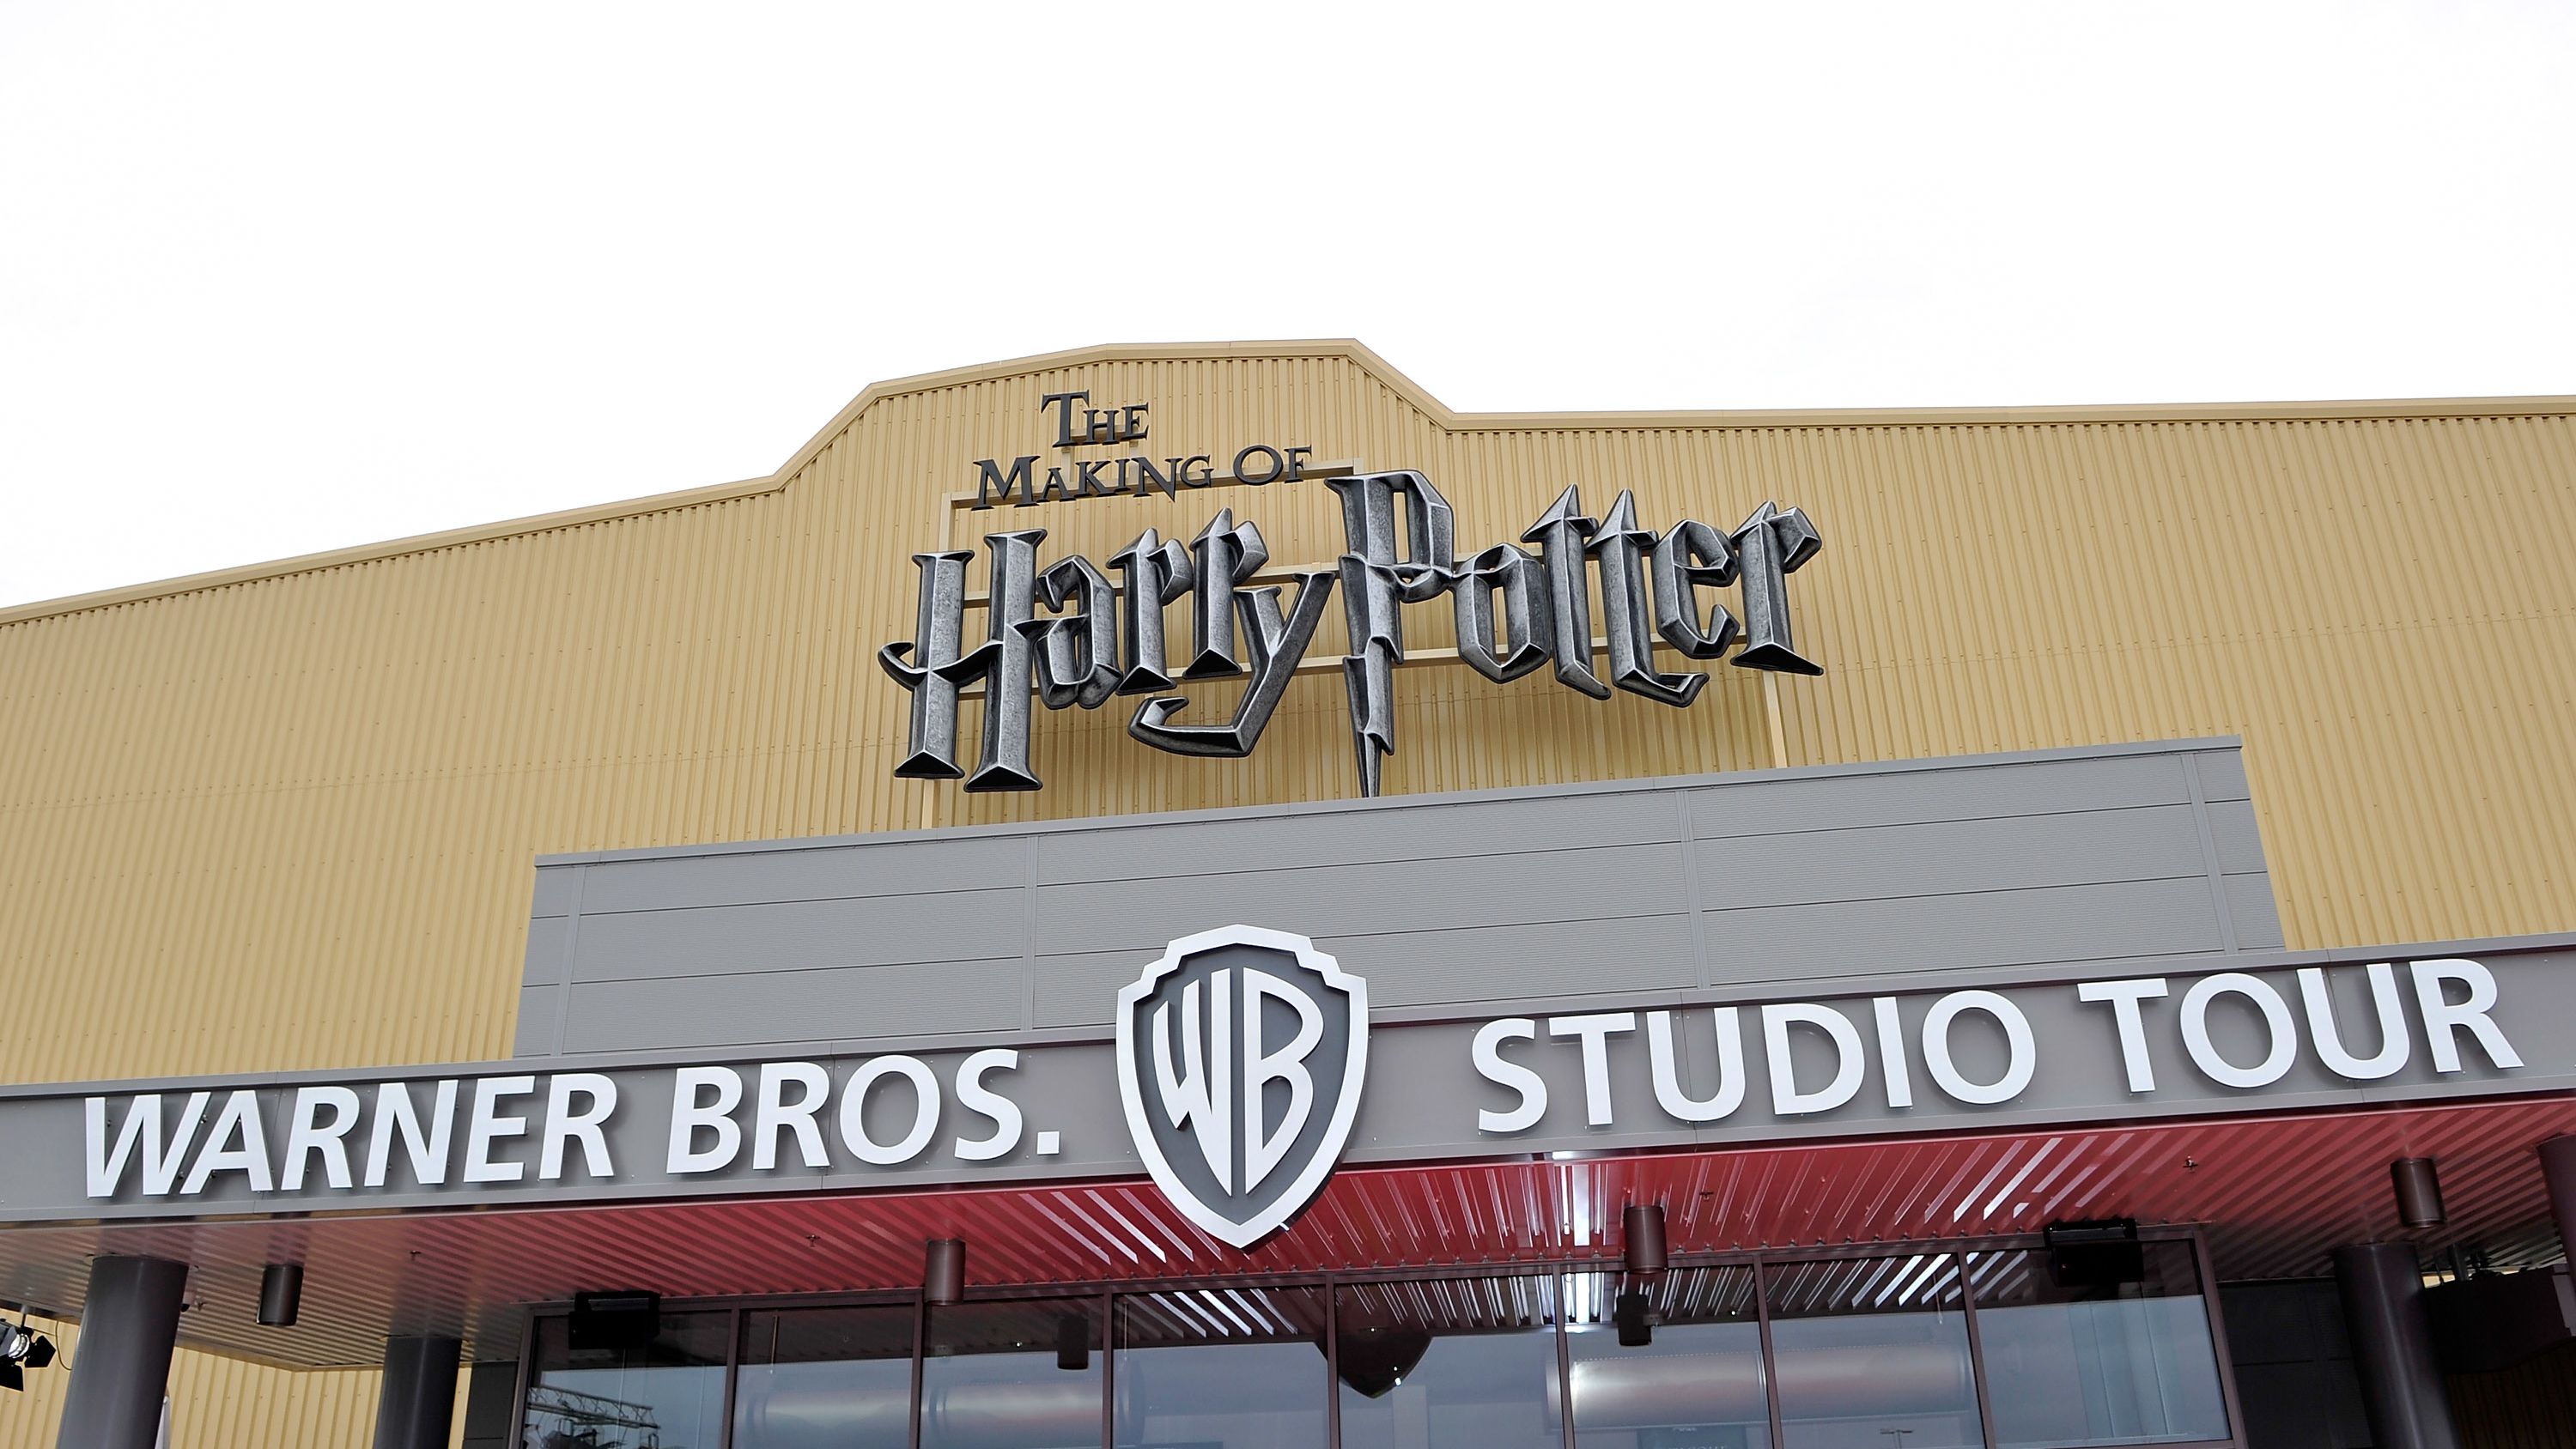 The public entrance for Warner Bros. Studio tour.